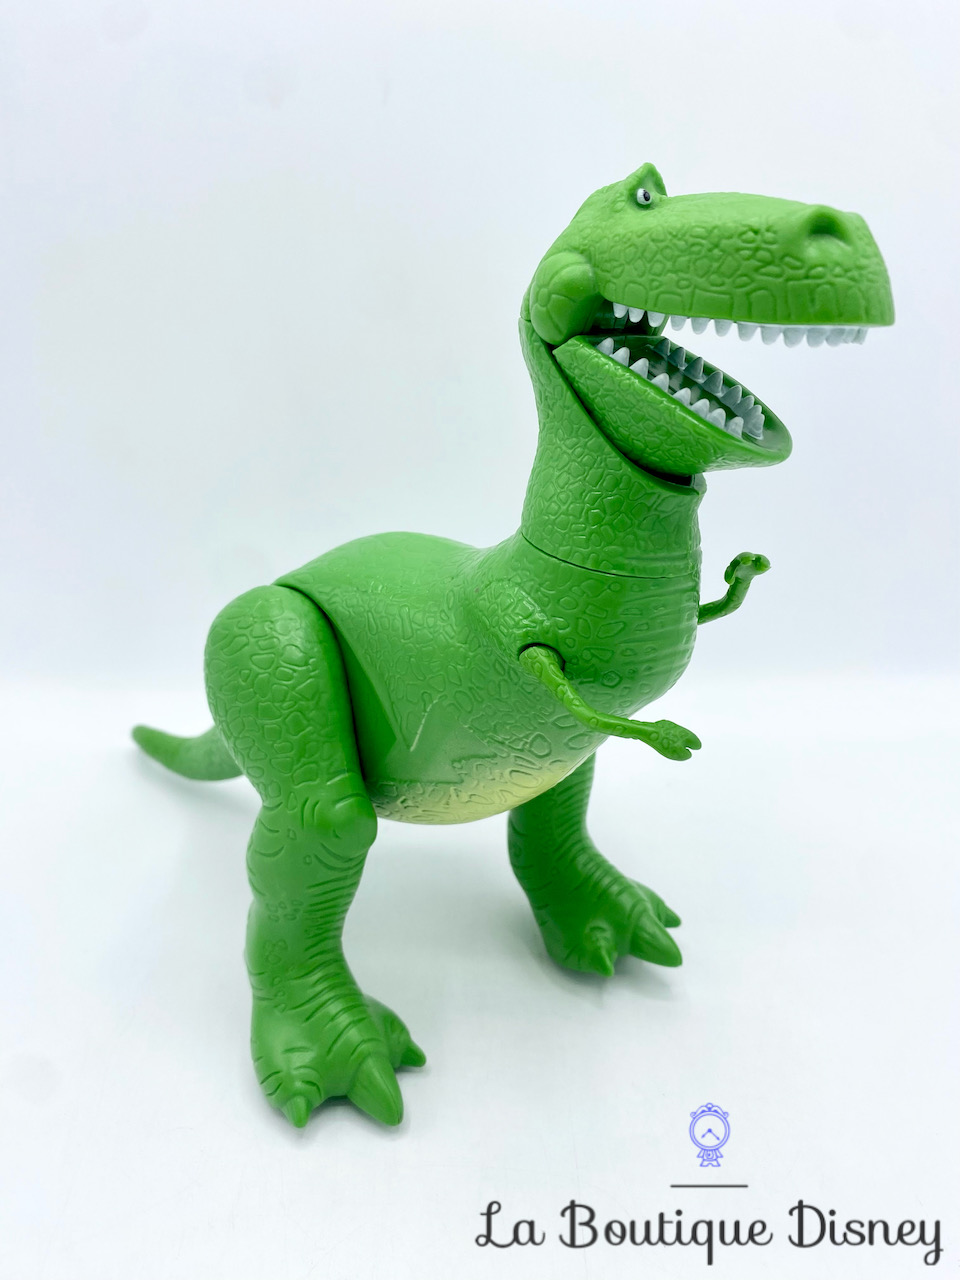 Jouet Figurine Rex Toy Story 4 Disney Mattel 2018 dinosaure vert 17 cm